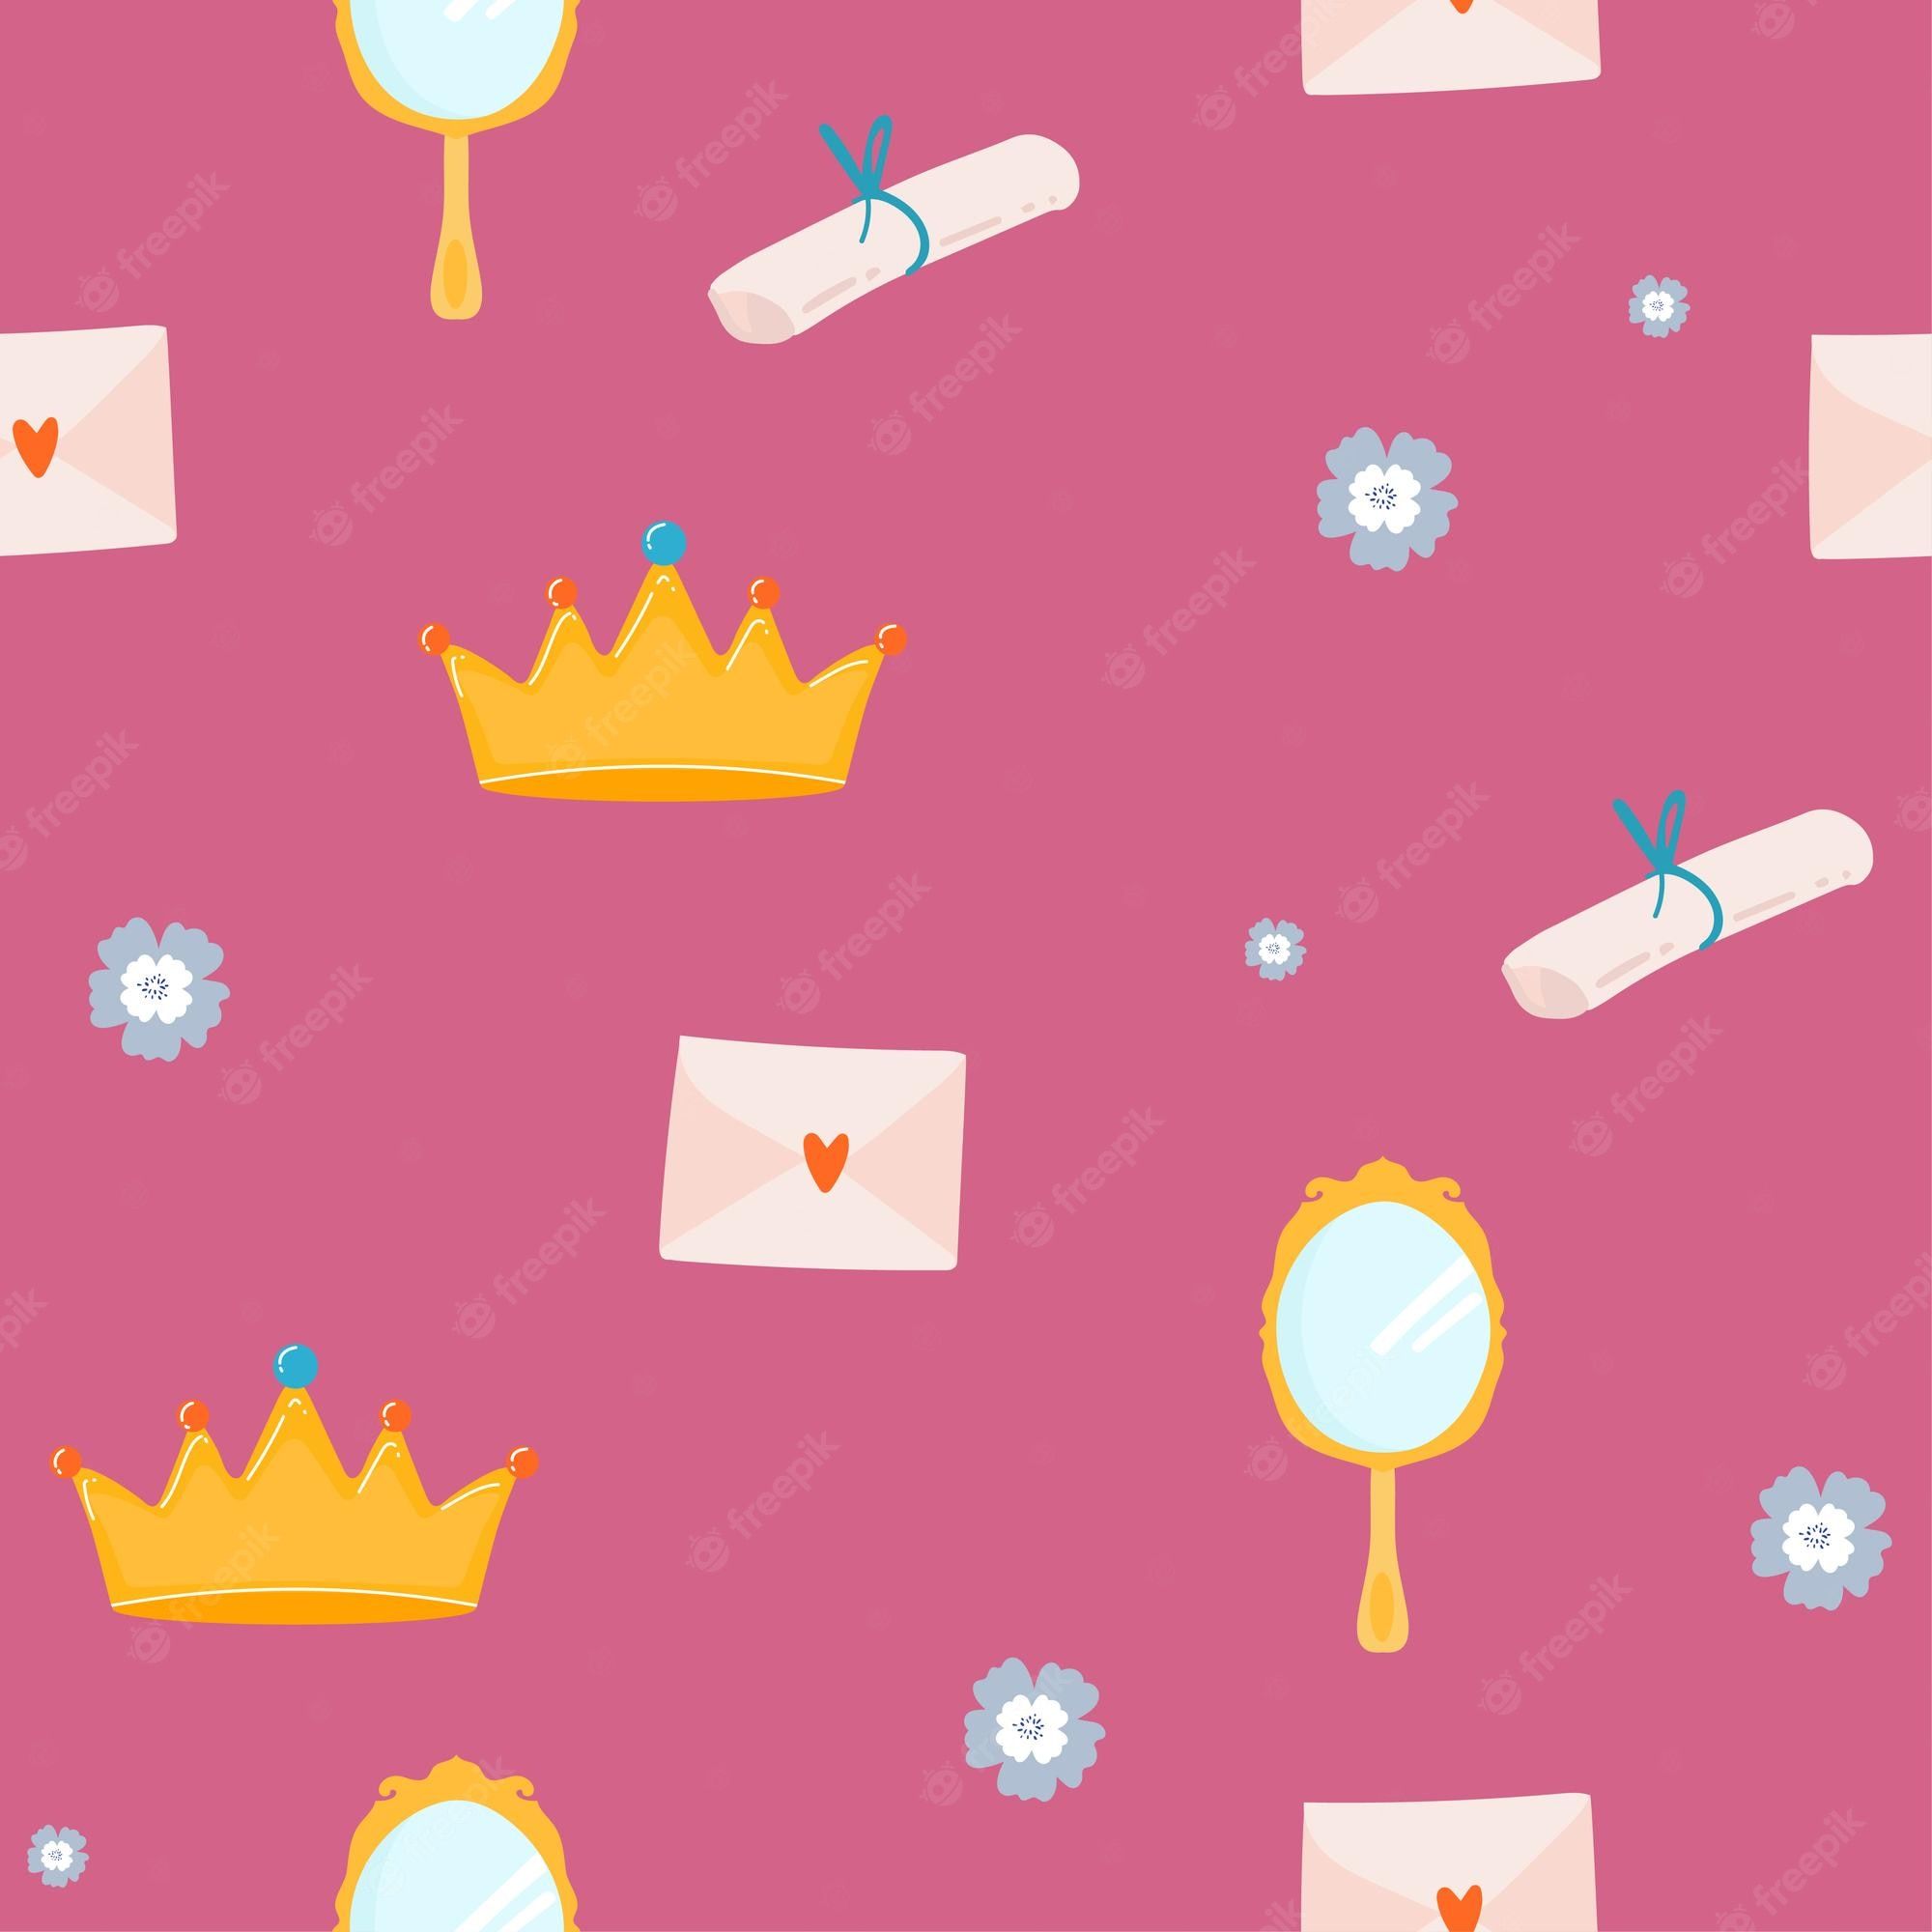 Princess crown wallpaper Vectors & Illustrations for Free Download